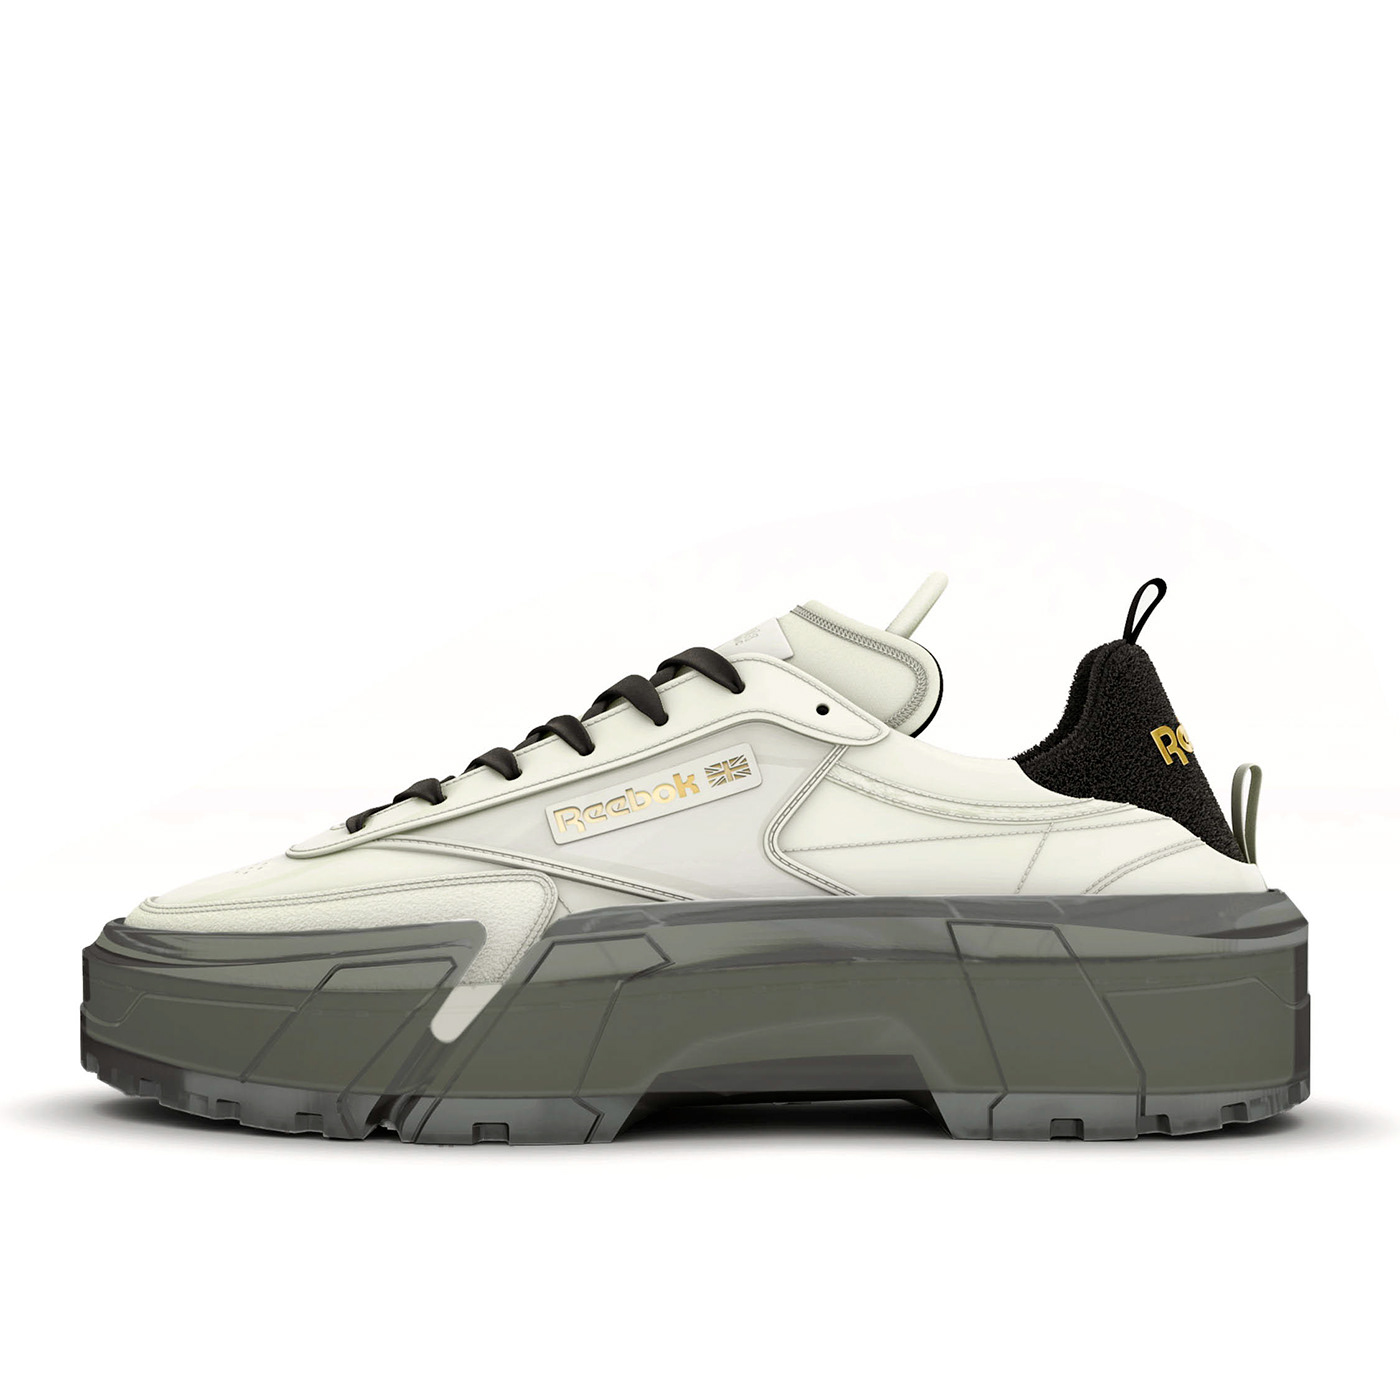 boot footwear shoe skate sneaker tennis